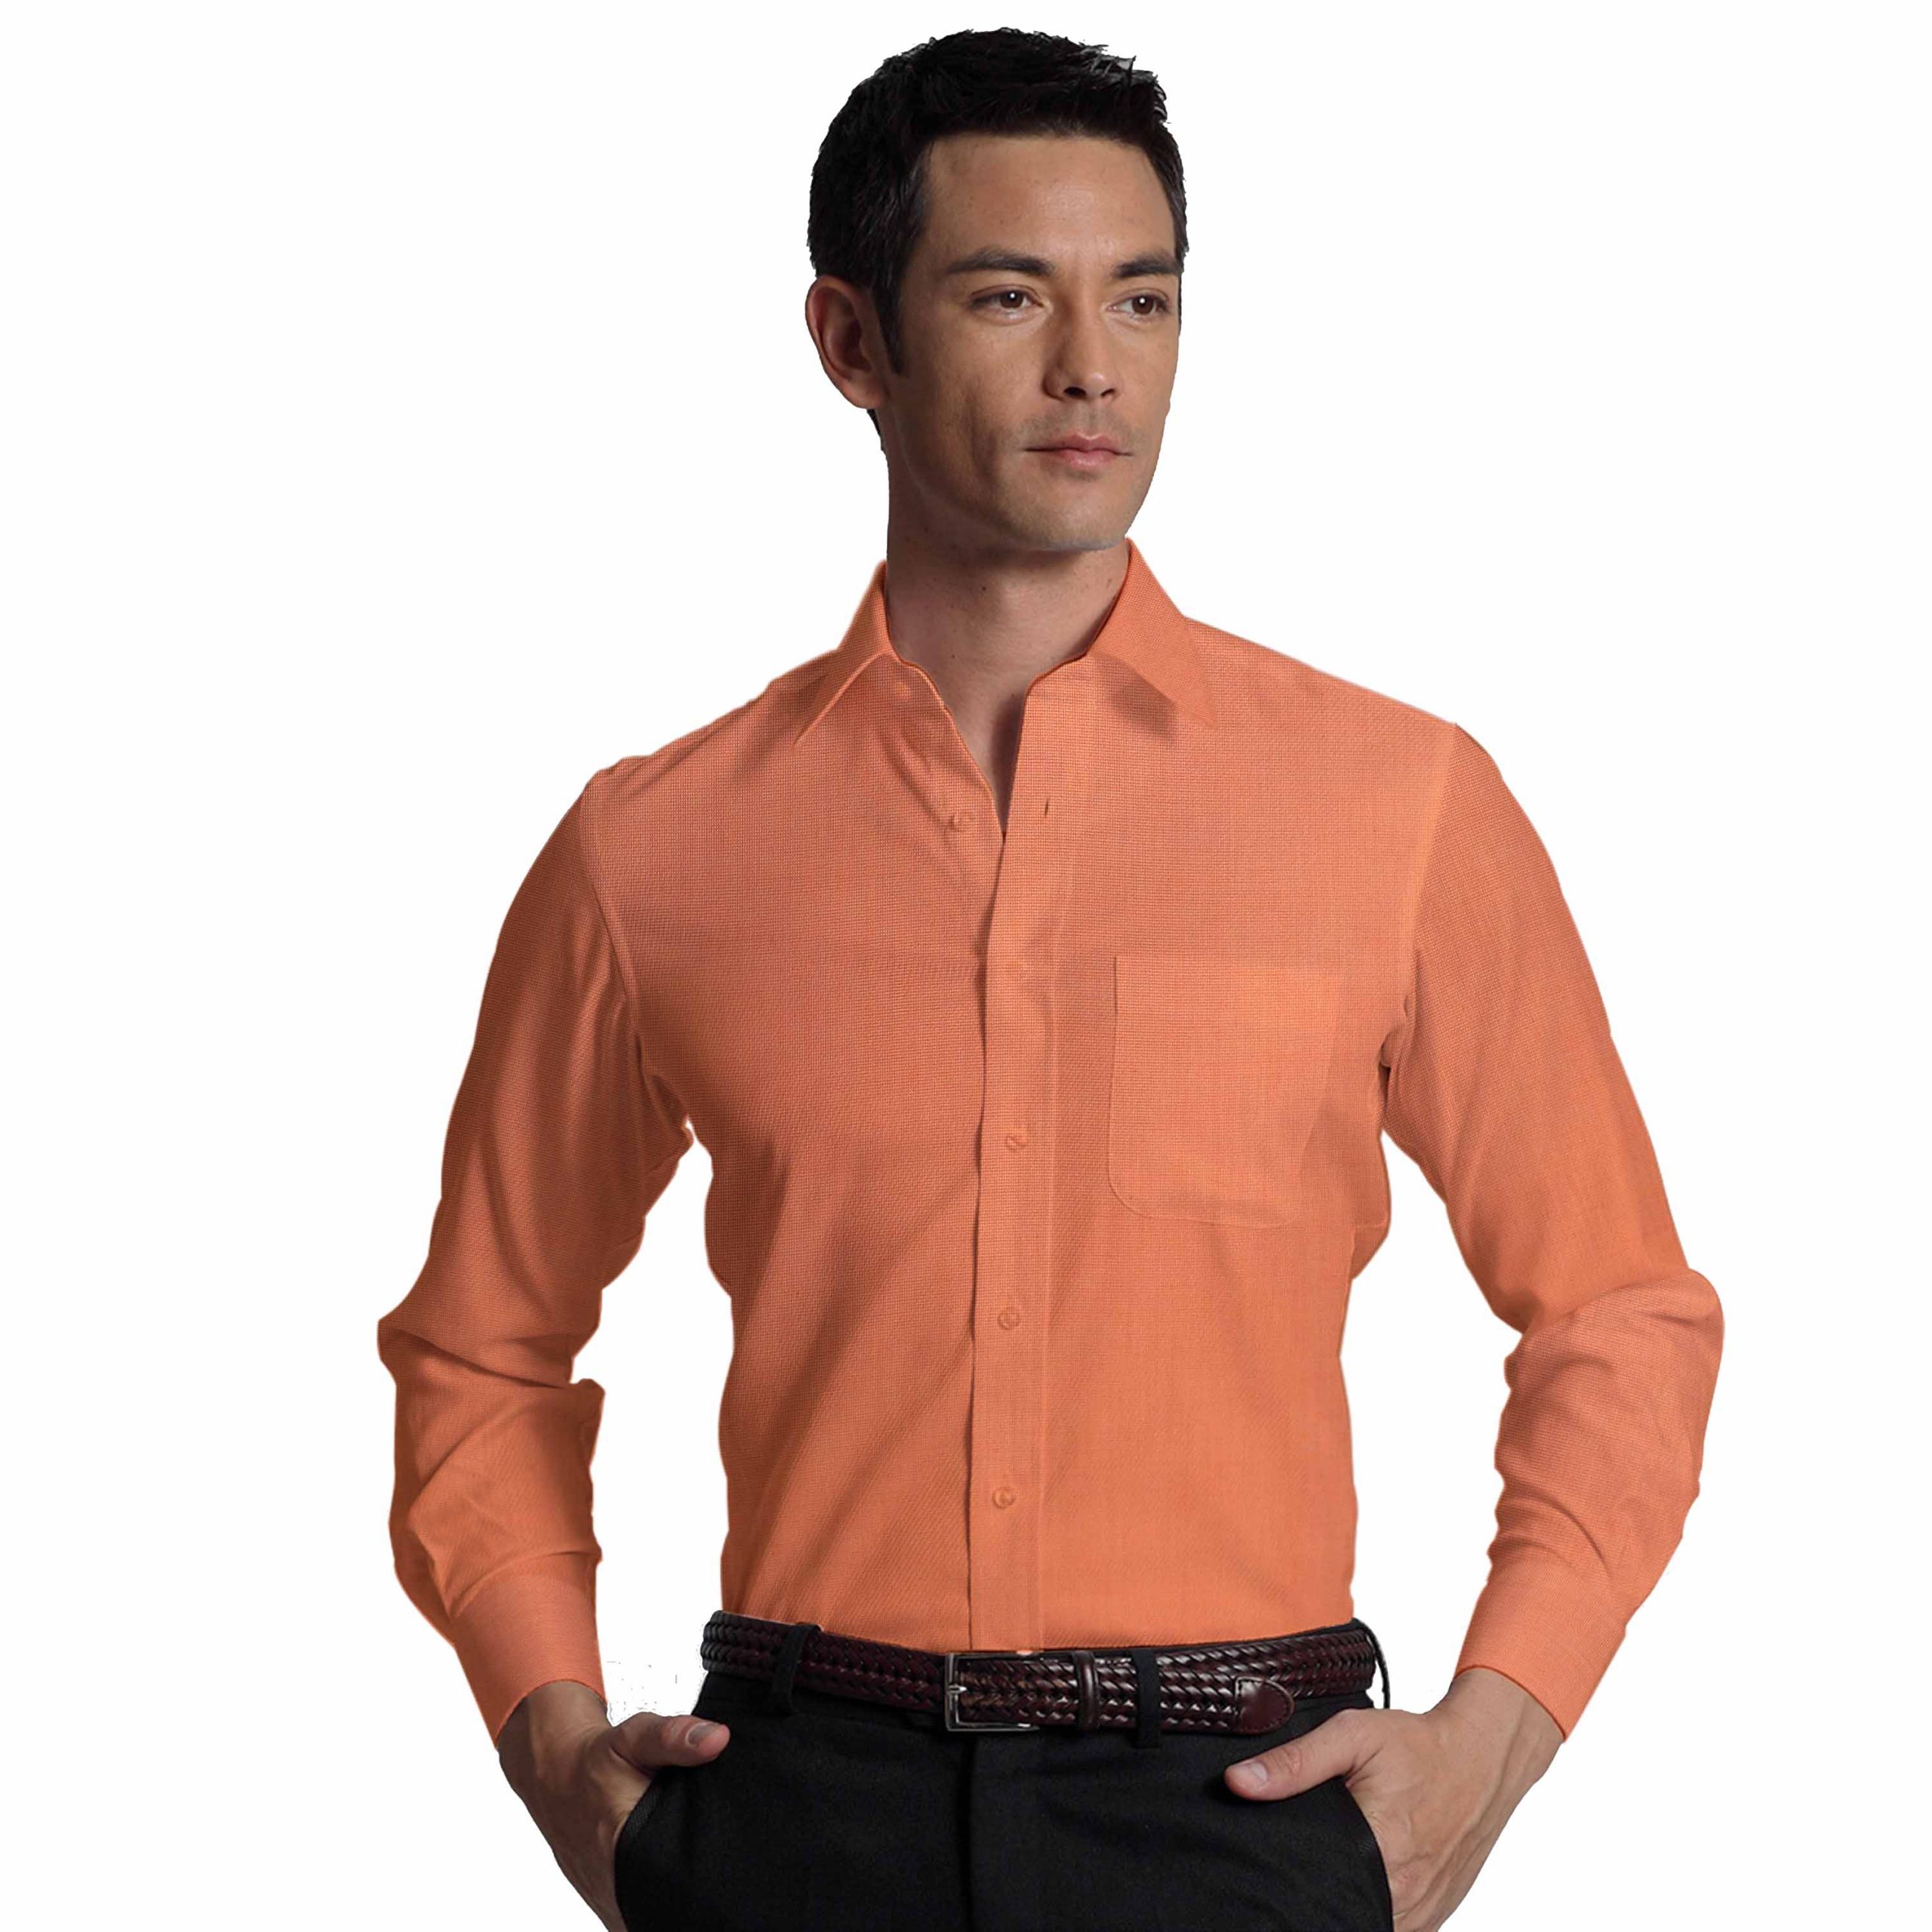 Solino Men's Peachish Orange Giza Cotton Oxford Weave Shirt Fabric